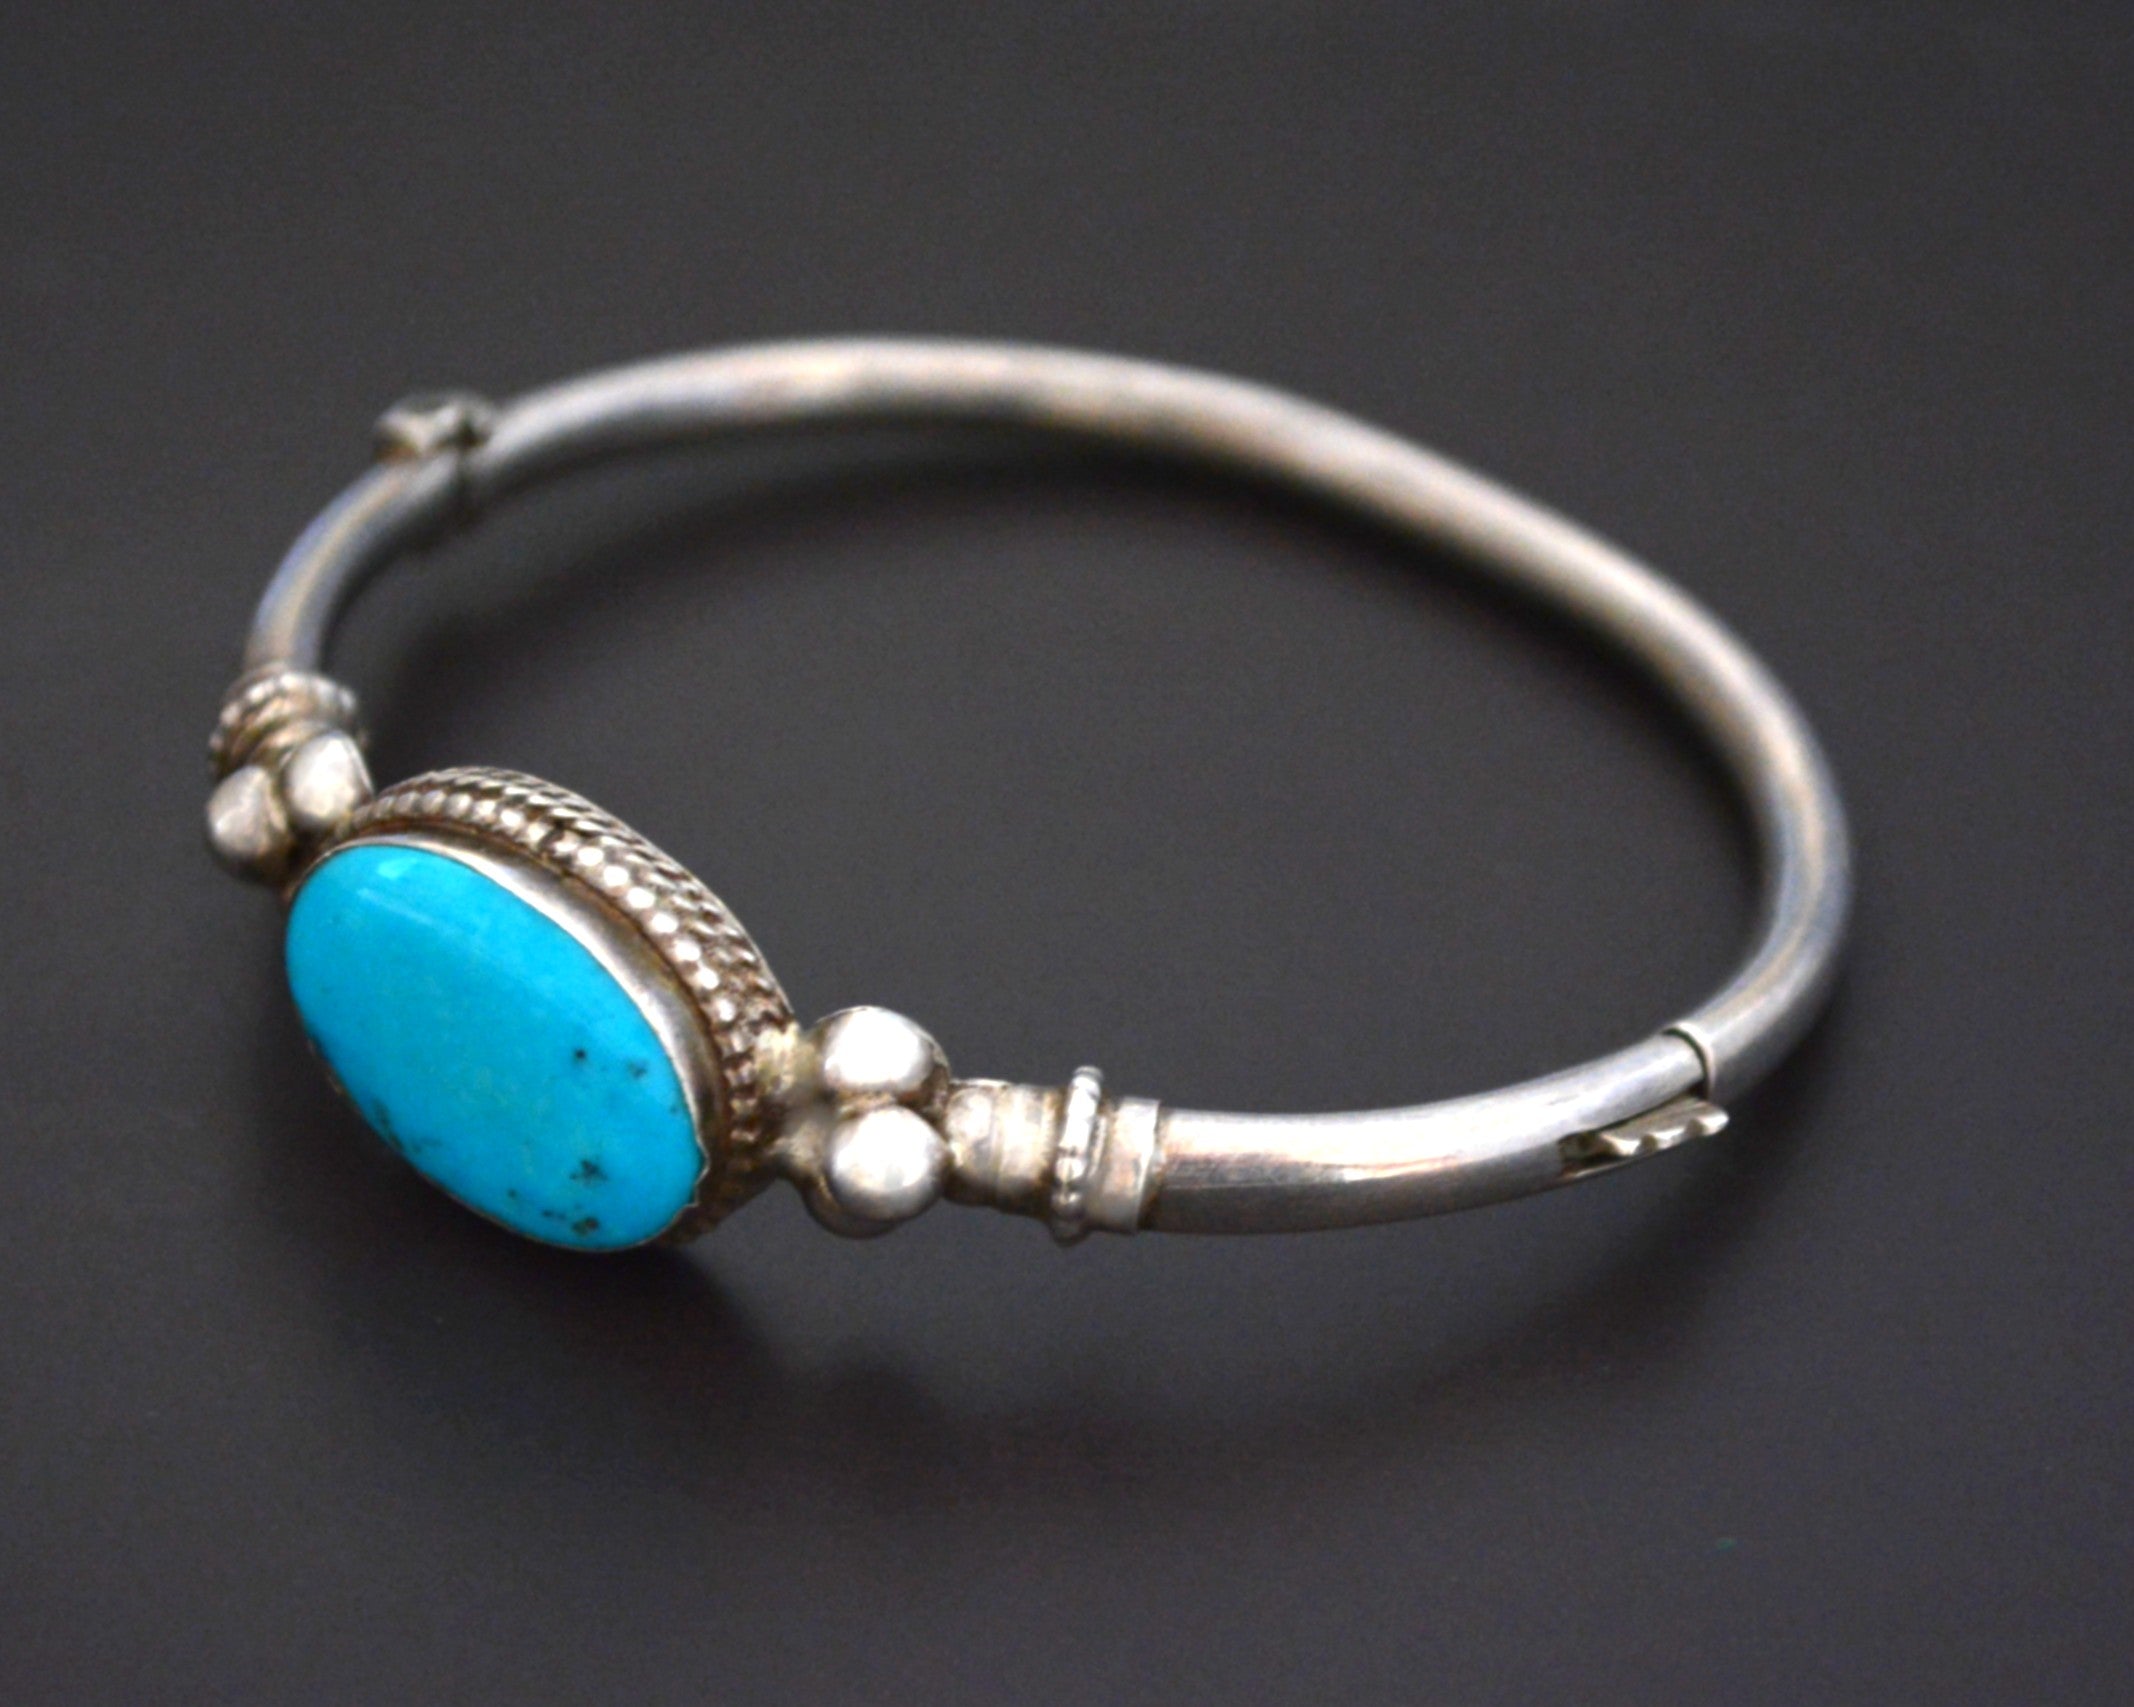 Vintage Turquoise Bracelet from India - SMALL/MEDIUM - Hinged